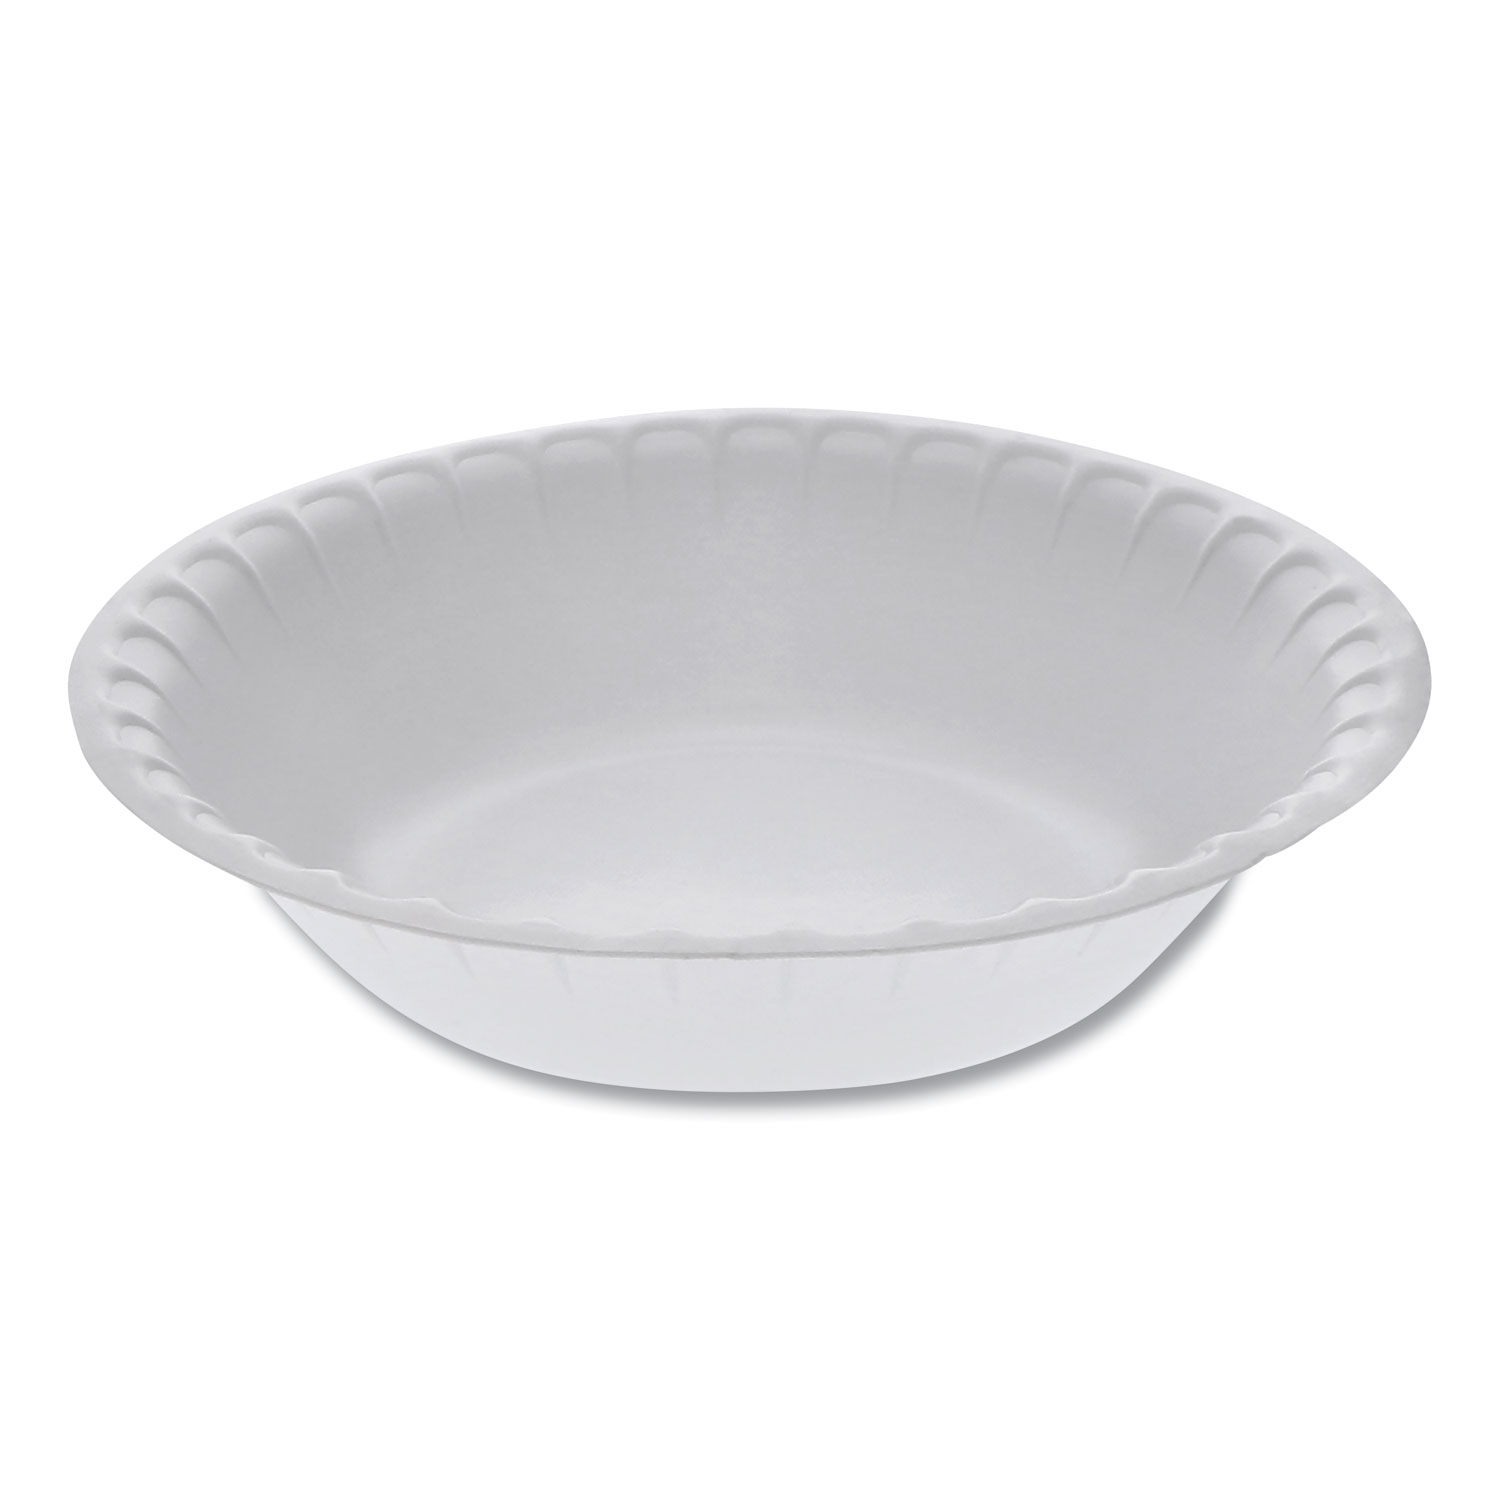 Pactiv Unlaminated Foam Dinnerware, Bowl, 30 oz, 6 Diameter, White, 450/Carton